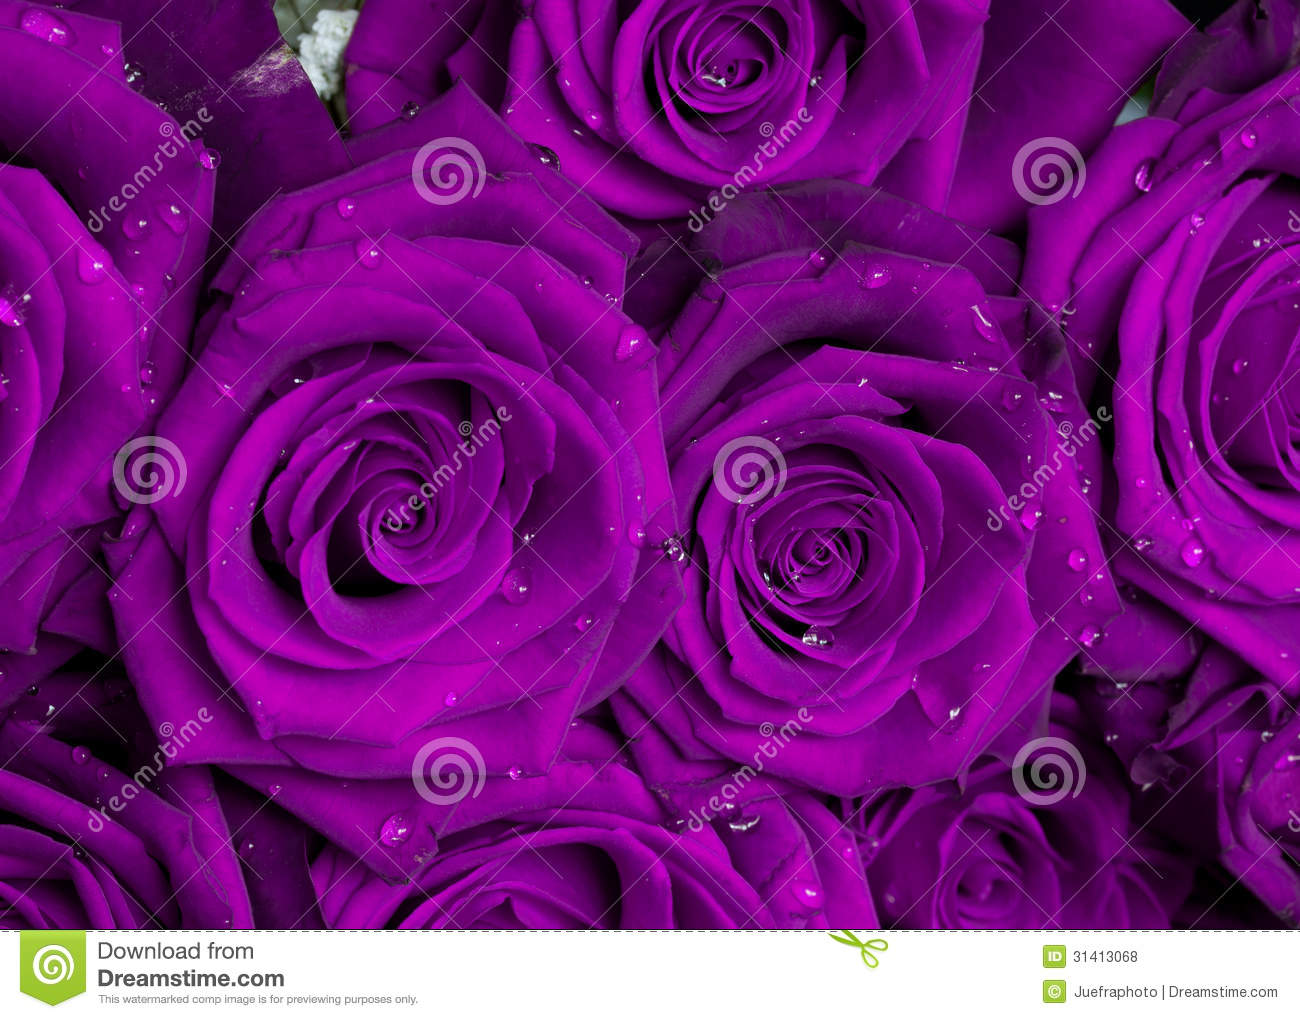 Purple Rose Bouquet Royalty Free Stock Photos   Image  31413068